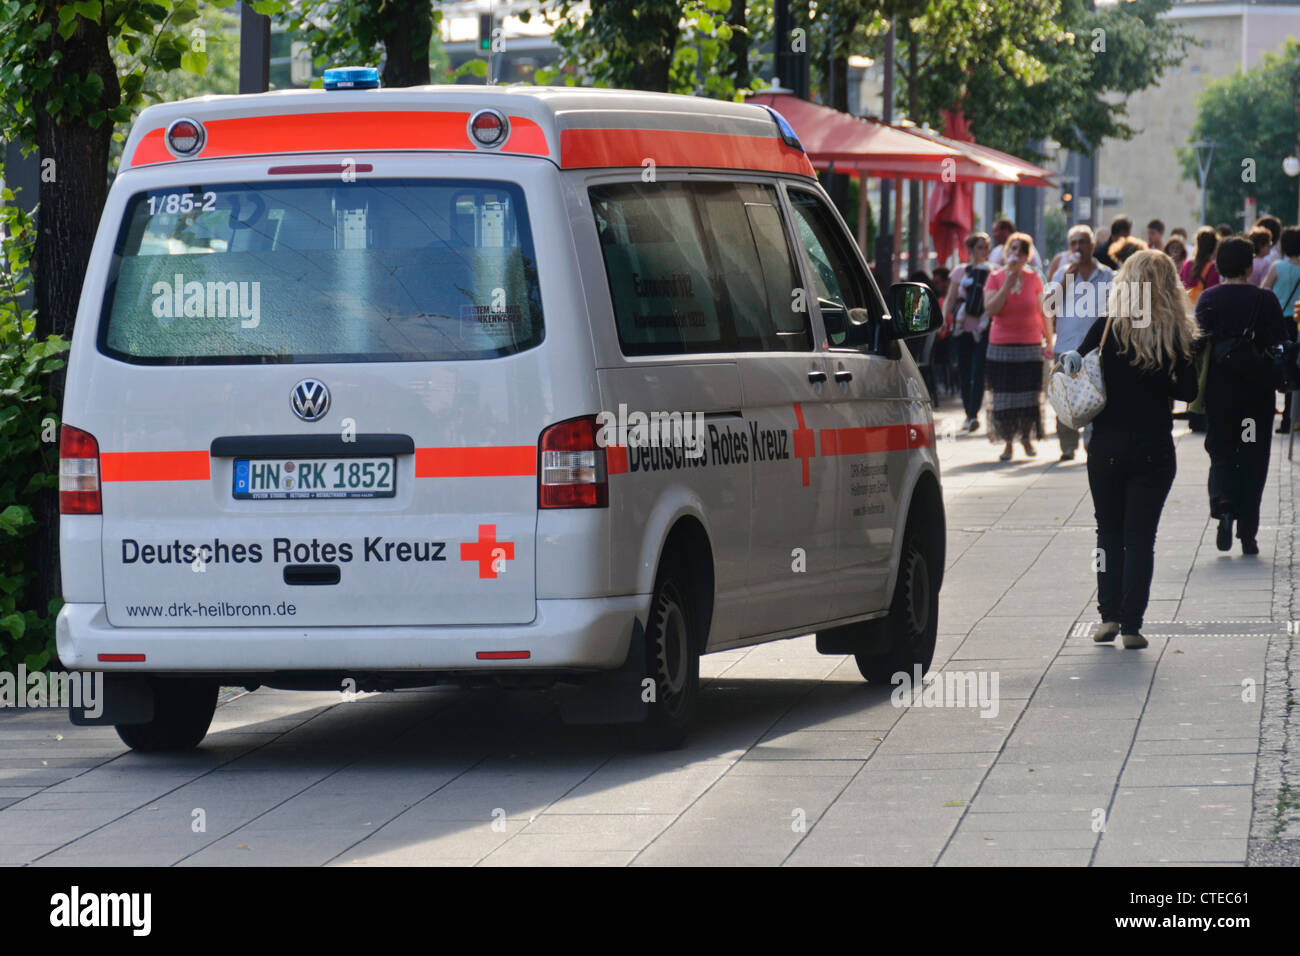 Ambulance Van "Deutsches Rotes Kreuz" "German Red Cross" on sidewalk pavement - Heilbronn Germany Europe Stock Photo